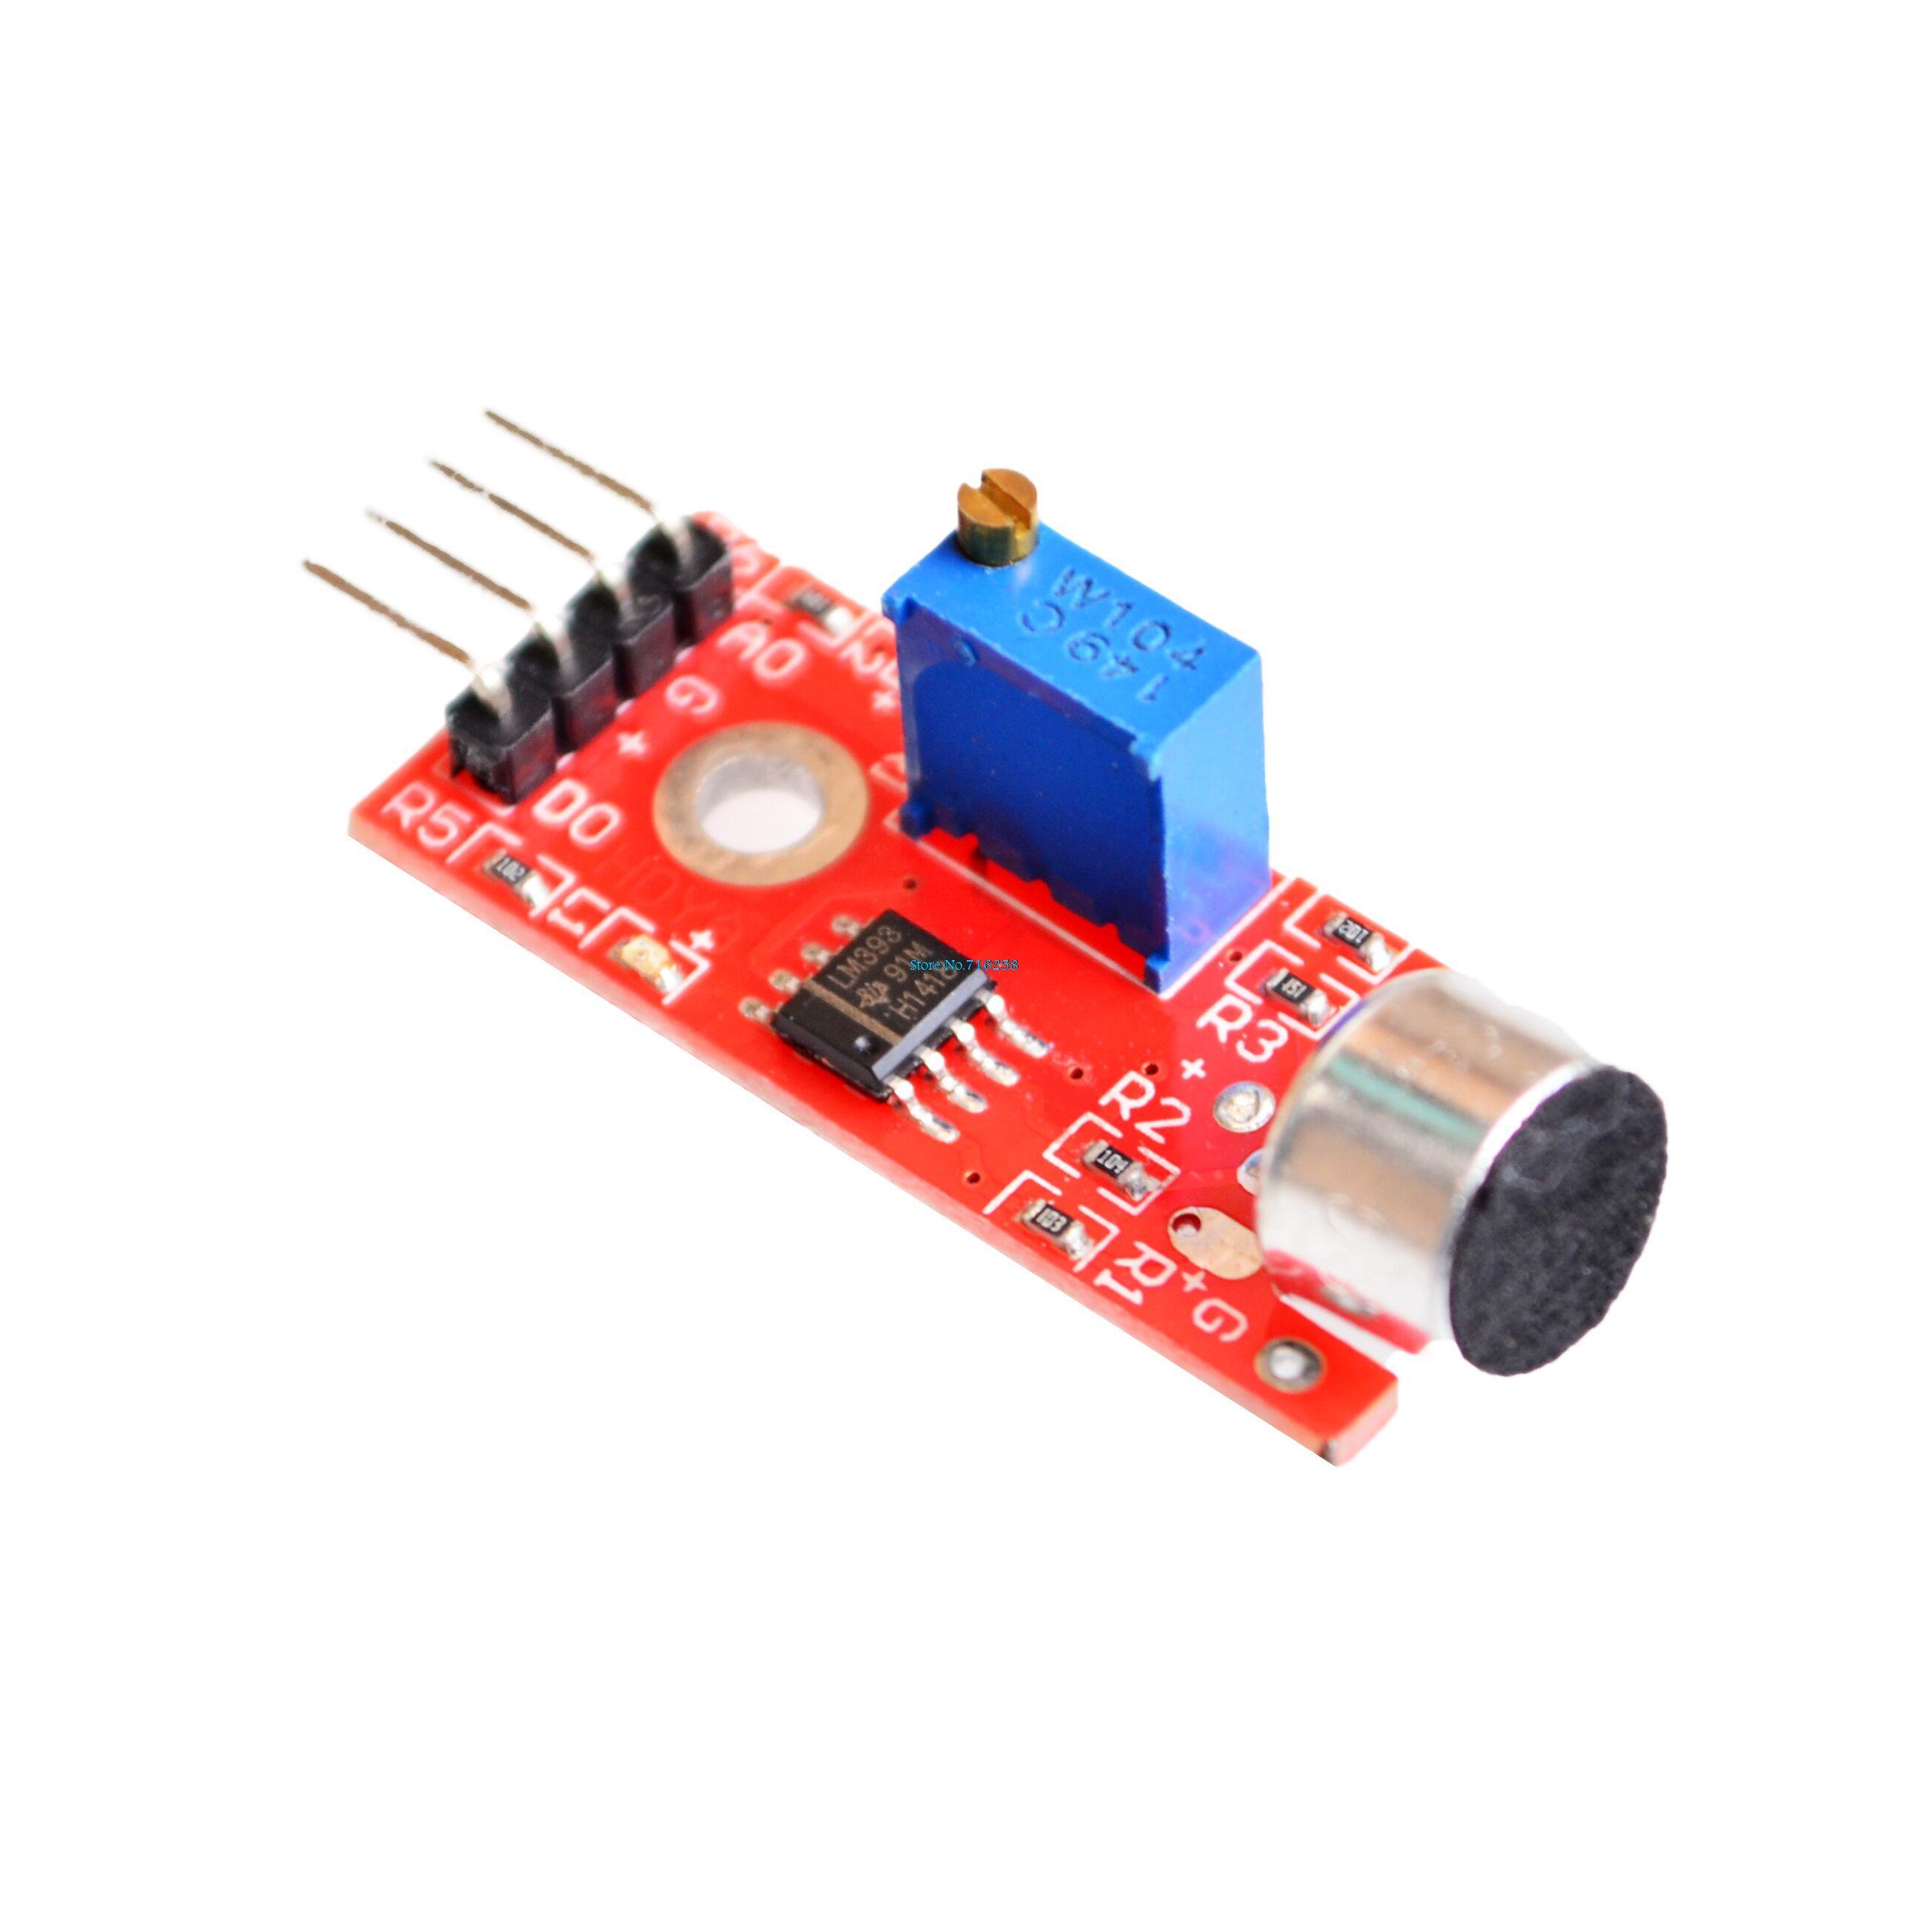 10pcs/lot KY-037 New 4pin Voice Sound Detection Sensor Module Microphone Transmitter Smart Robot Car for arduino DIY Kit